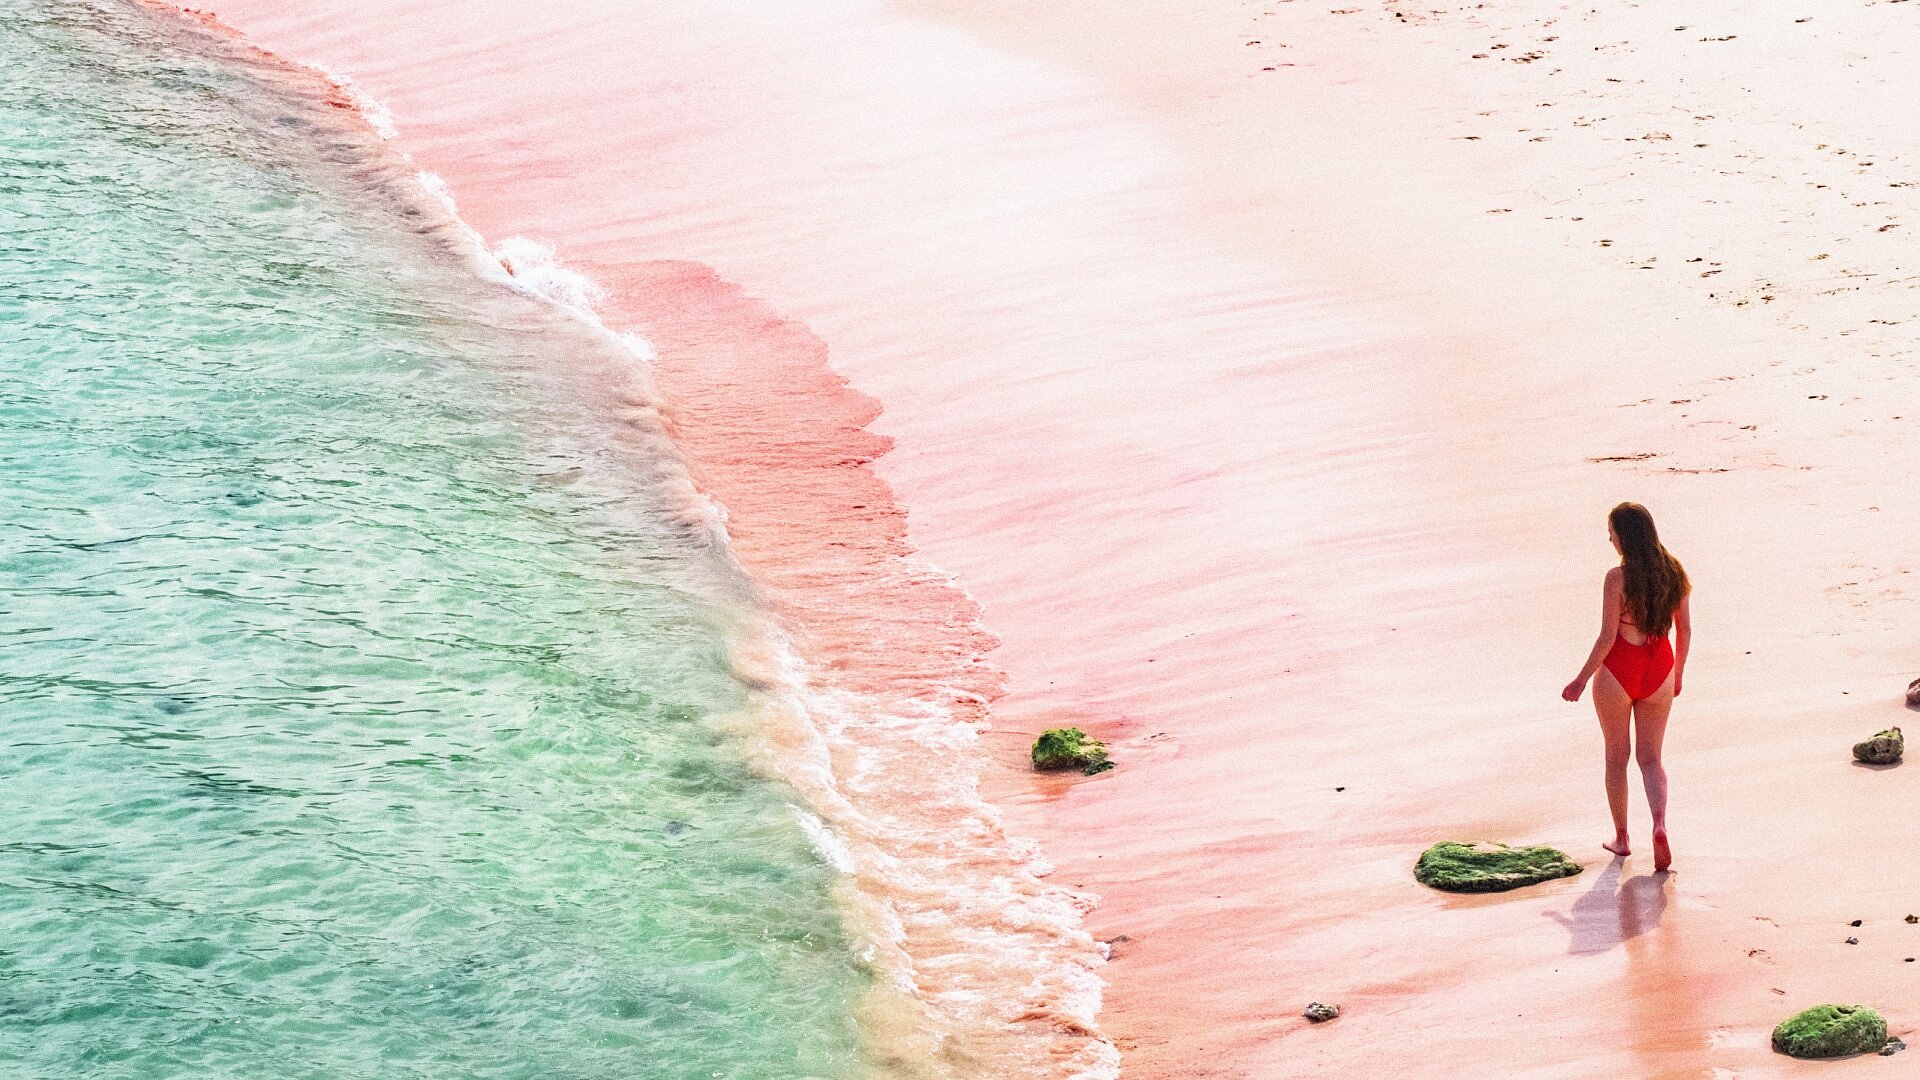 12 colored sand beaches to visit around the world - Tripadvisor